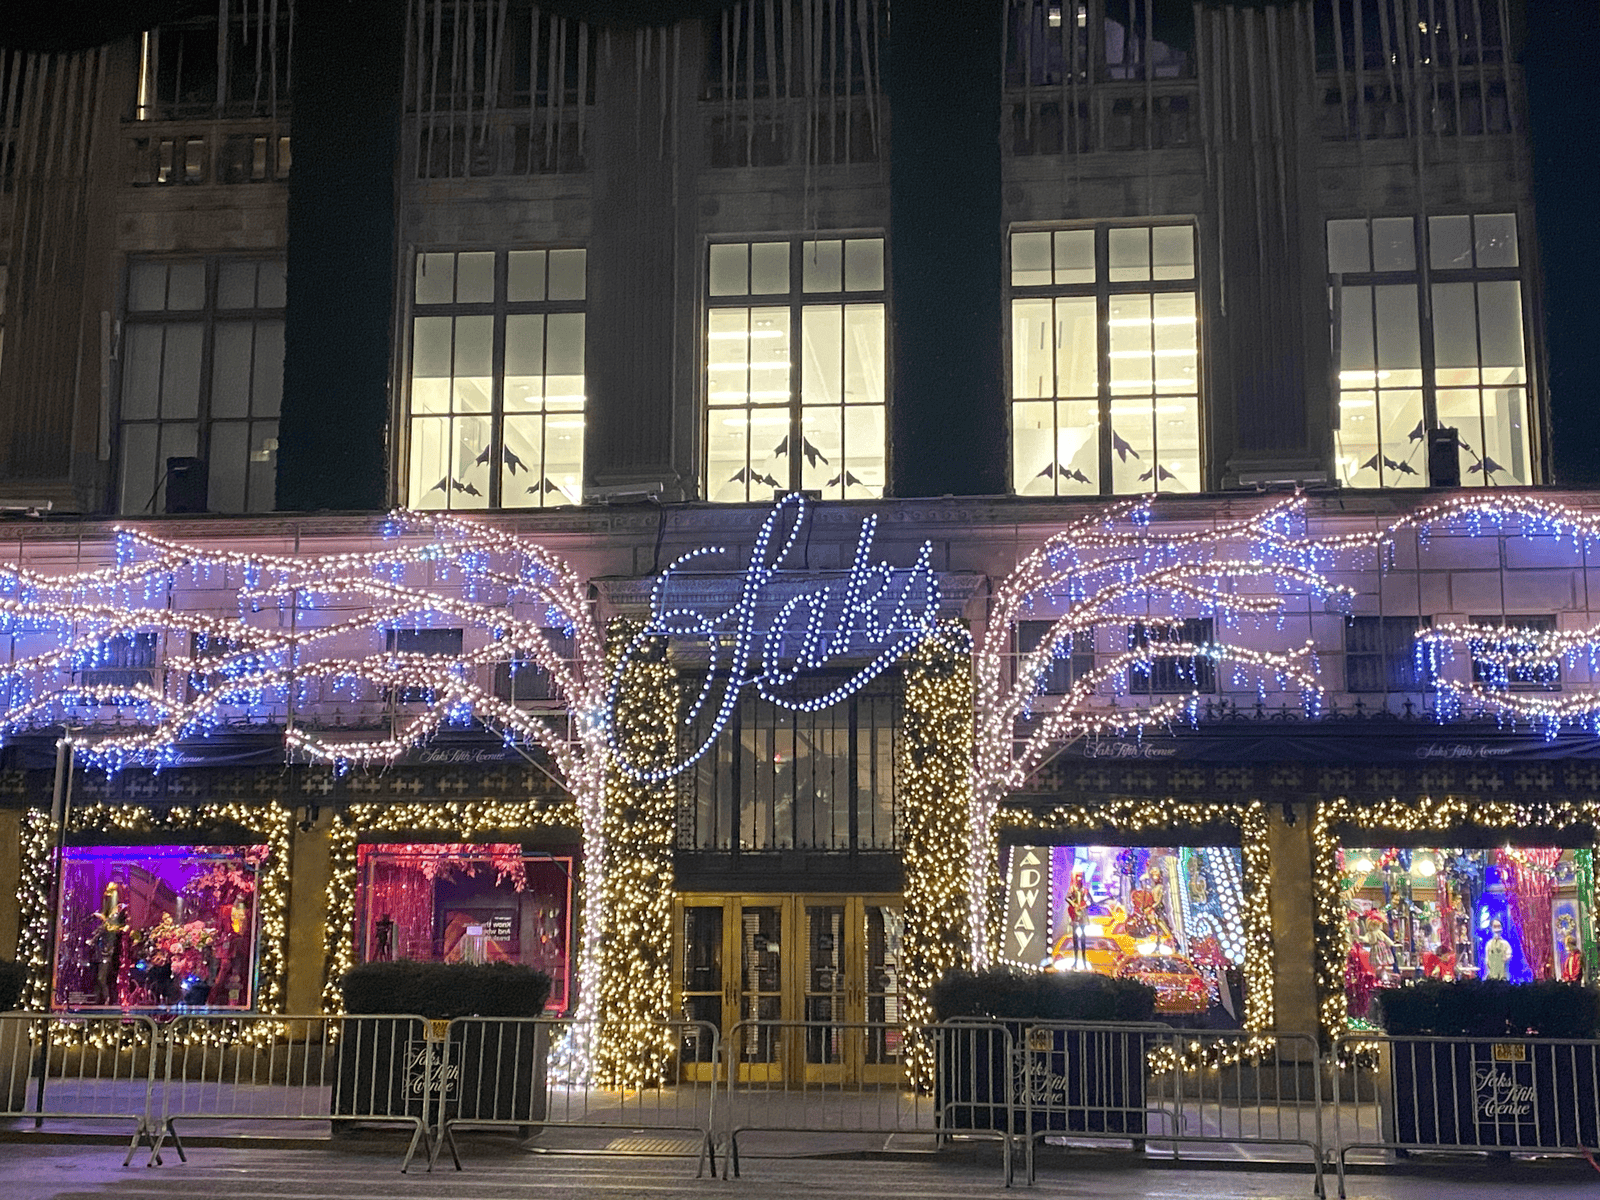 Saks 5th Avenue at Christmas